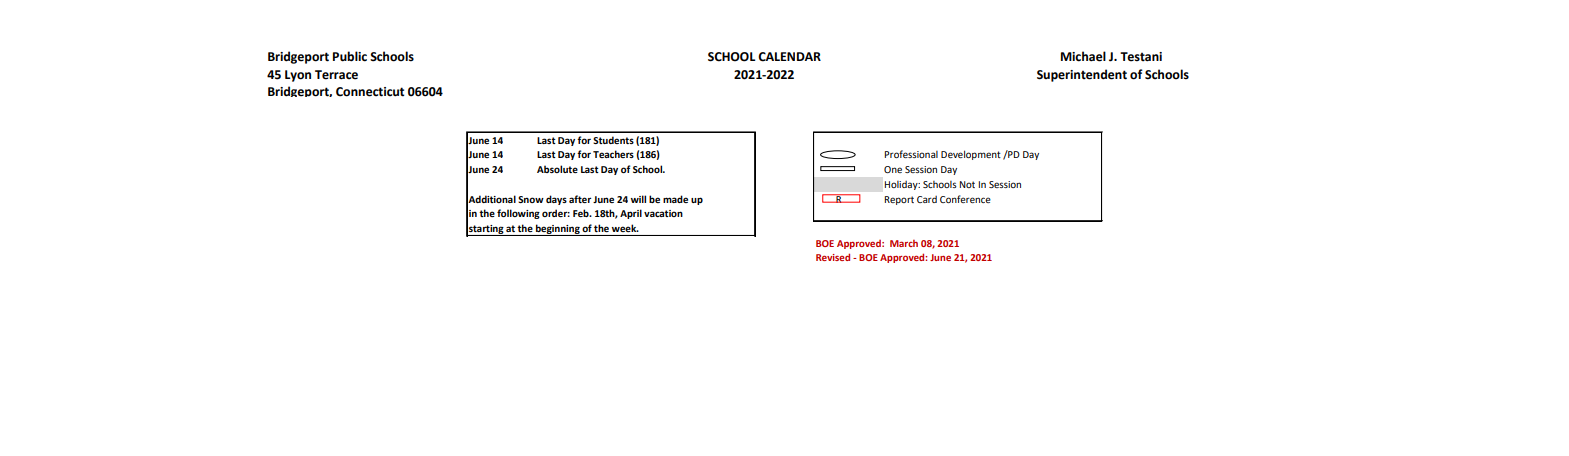 District School Academic Calendar Key for Bryant School